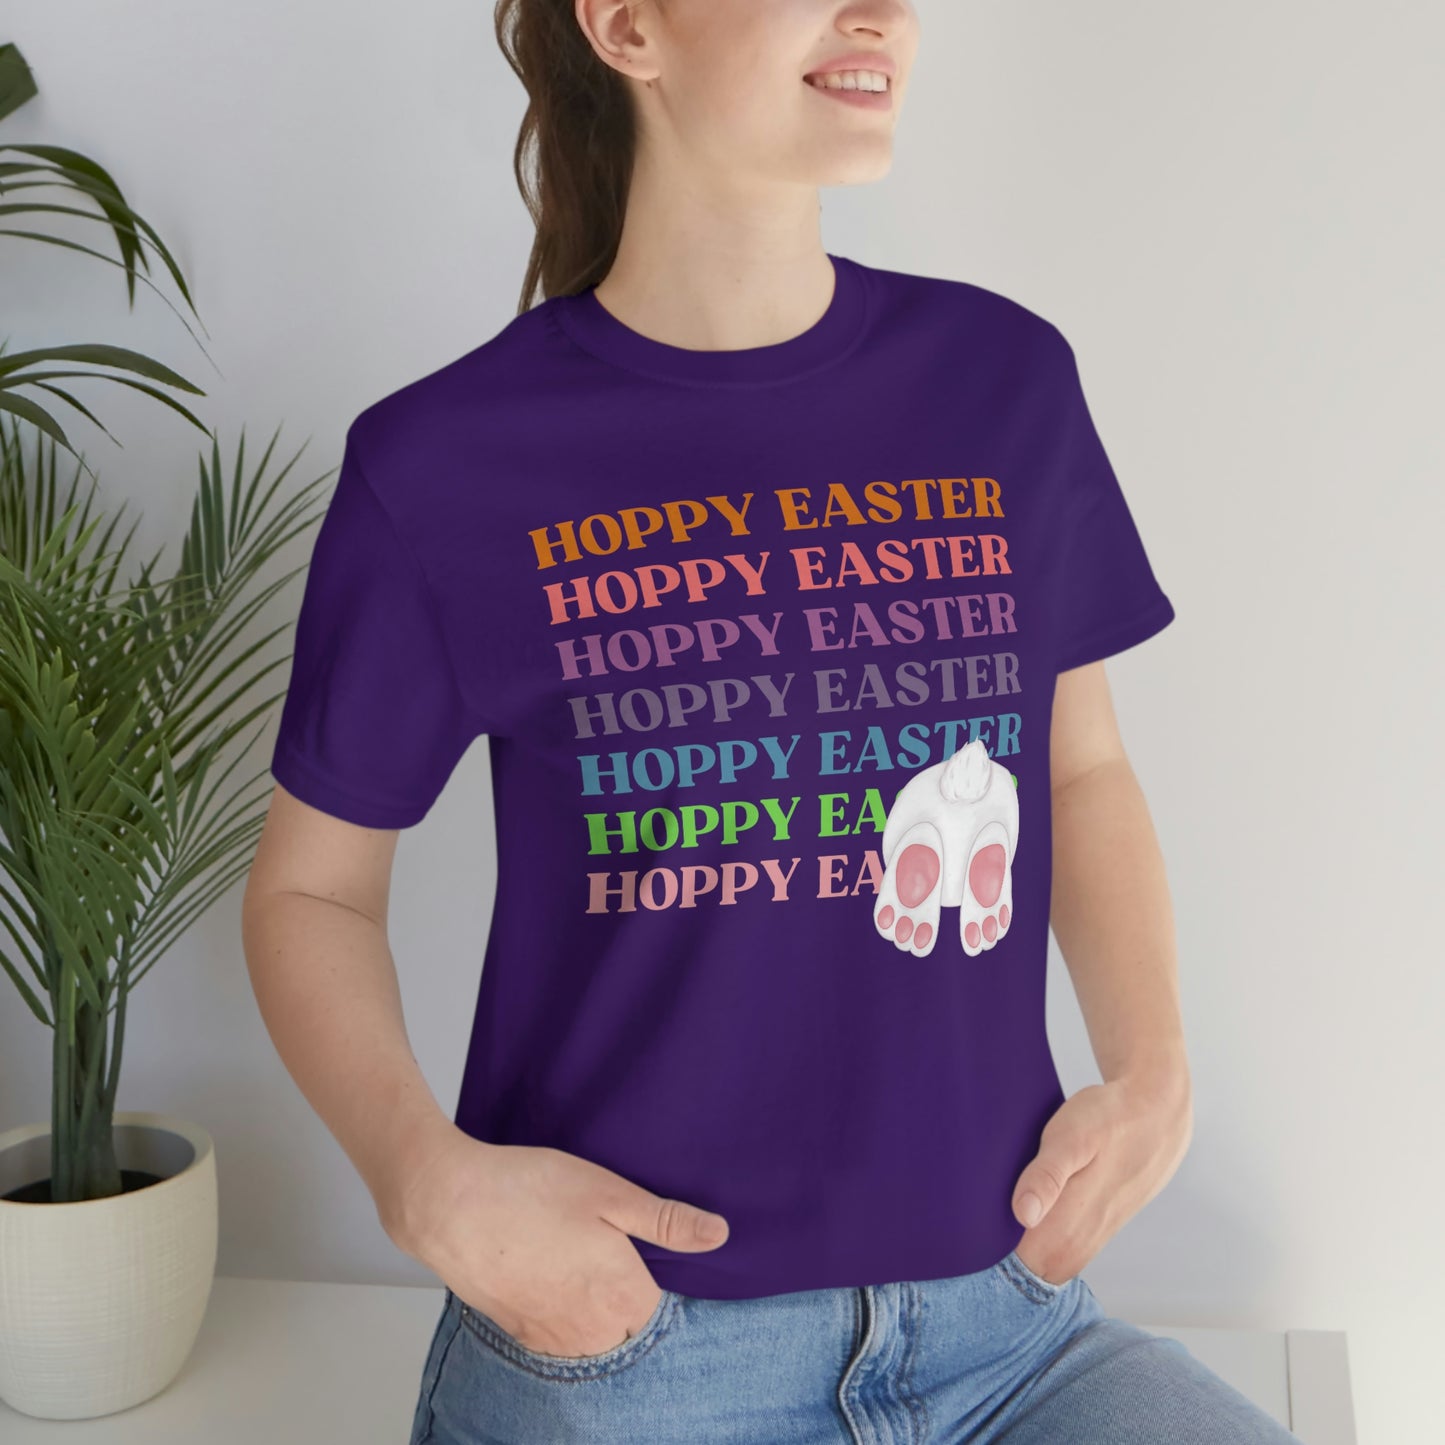 Hoppy Easter Bunny Rabbit Cotton Tail Unisex Jersey Short Sleeve Tee Small-3XL Happy Easter